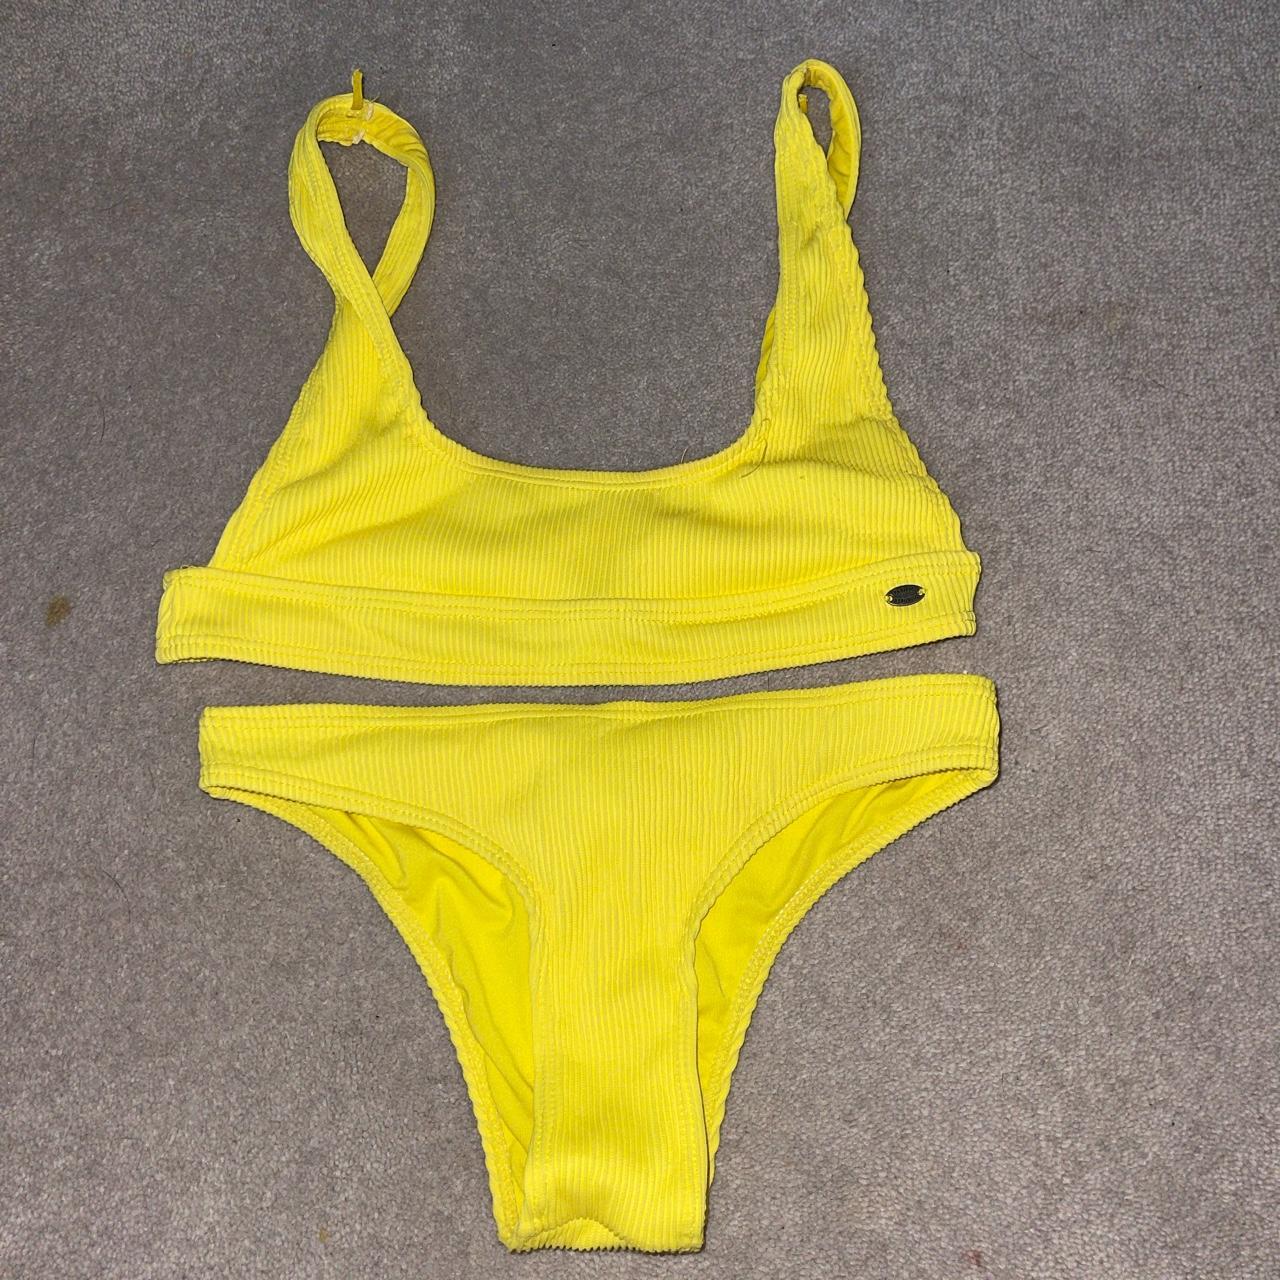 PULL & BEAR - gorgeous yellow bikini with cheeky... - Depop